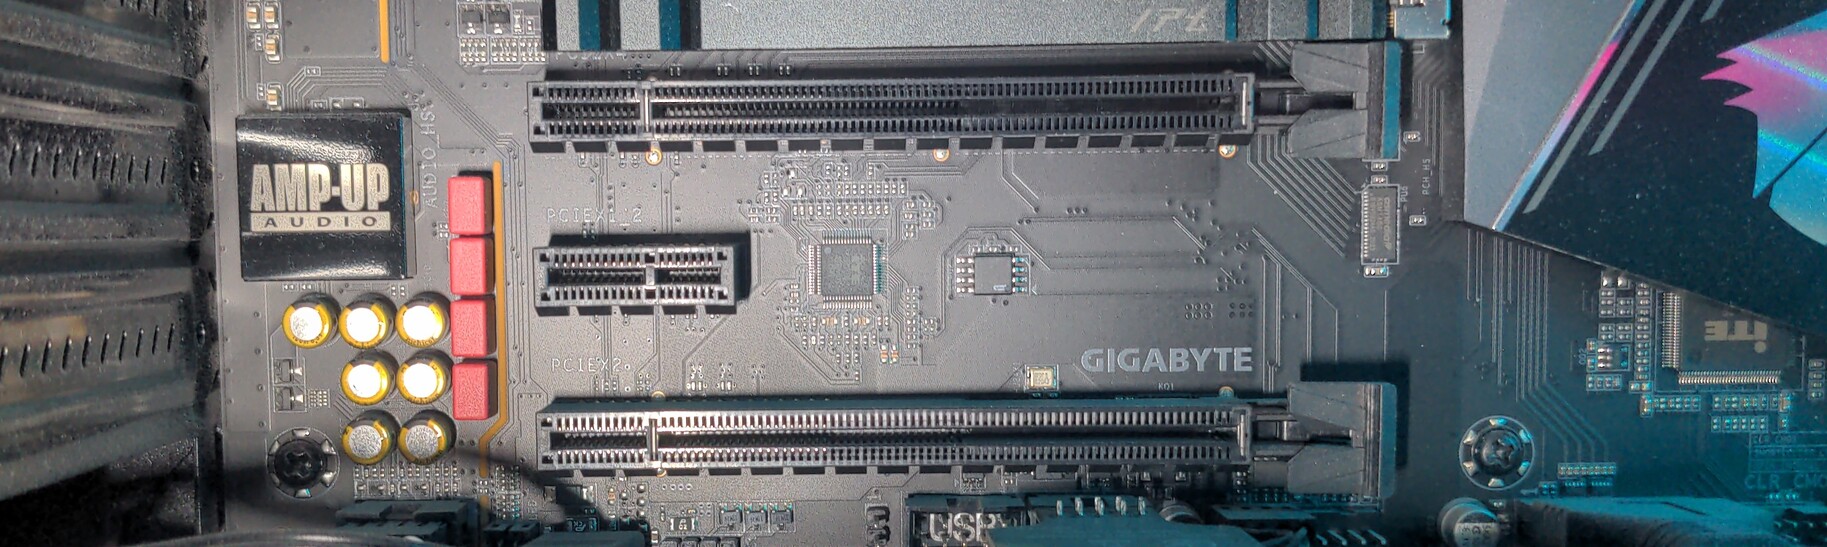 Three PCIe slots on a desktop PC motherboard.